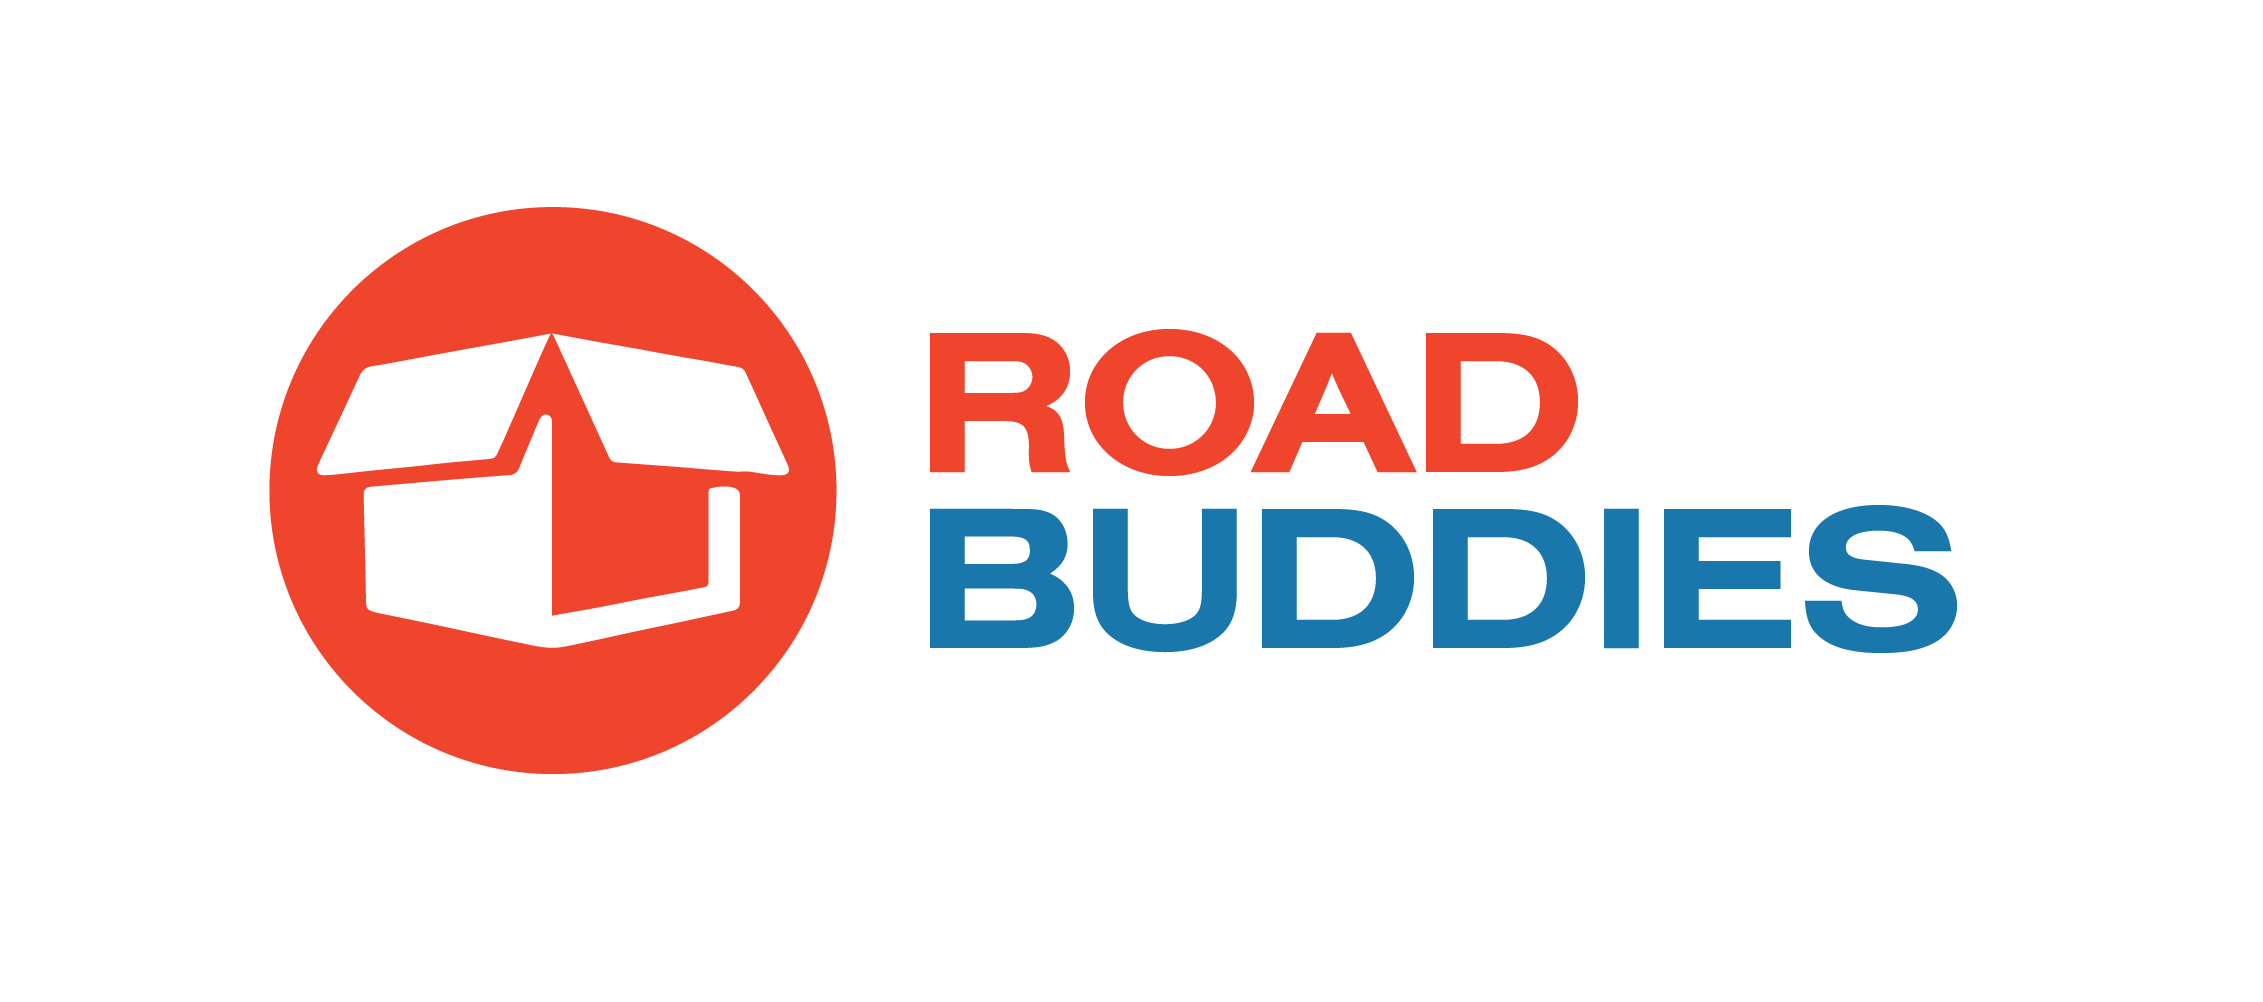 Roadbuddies